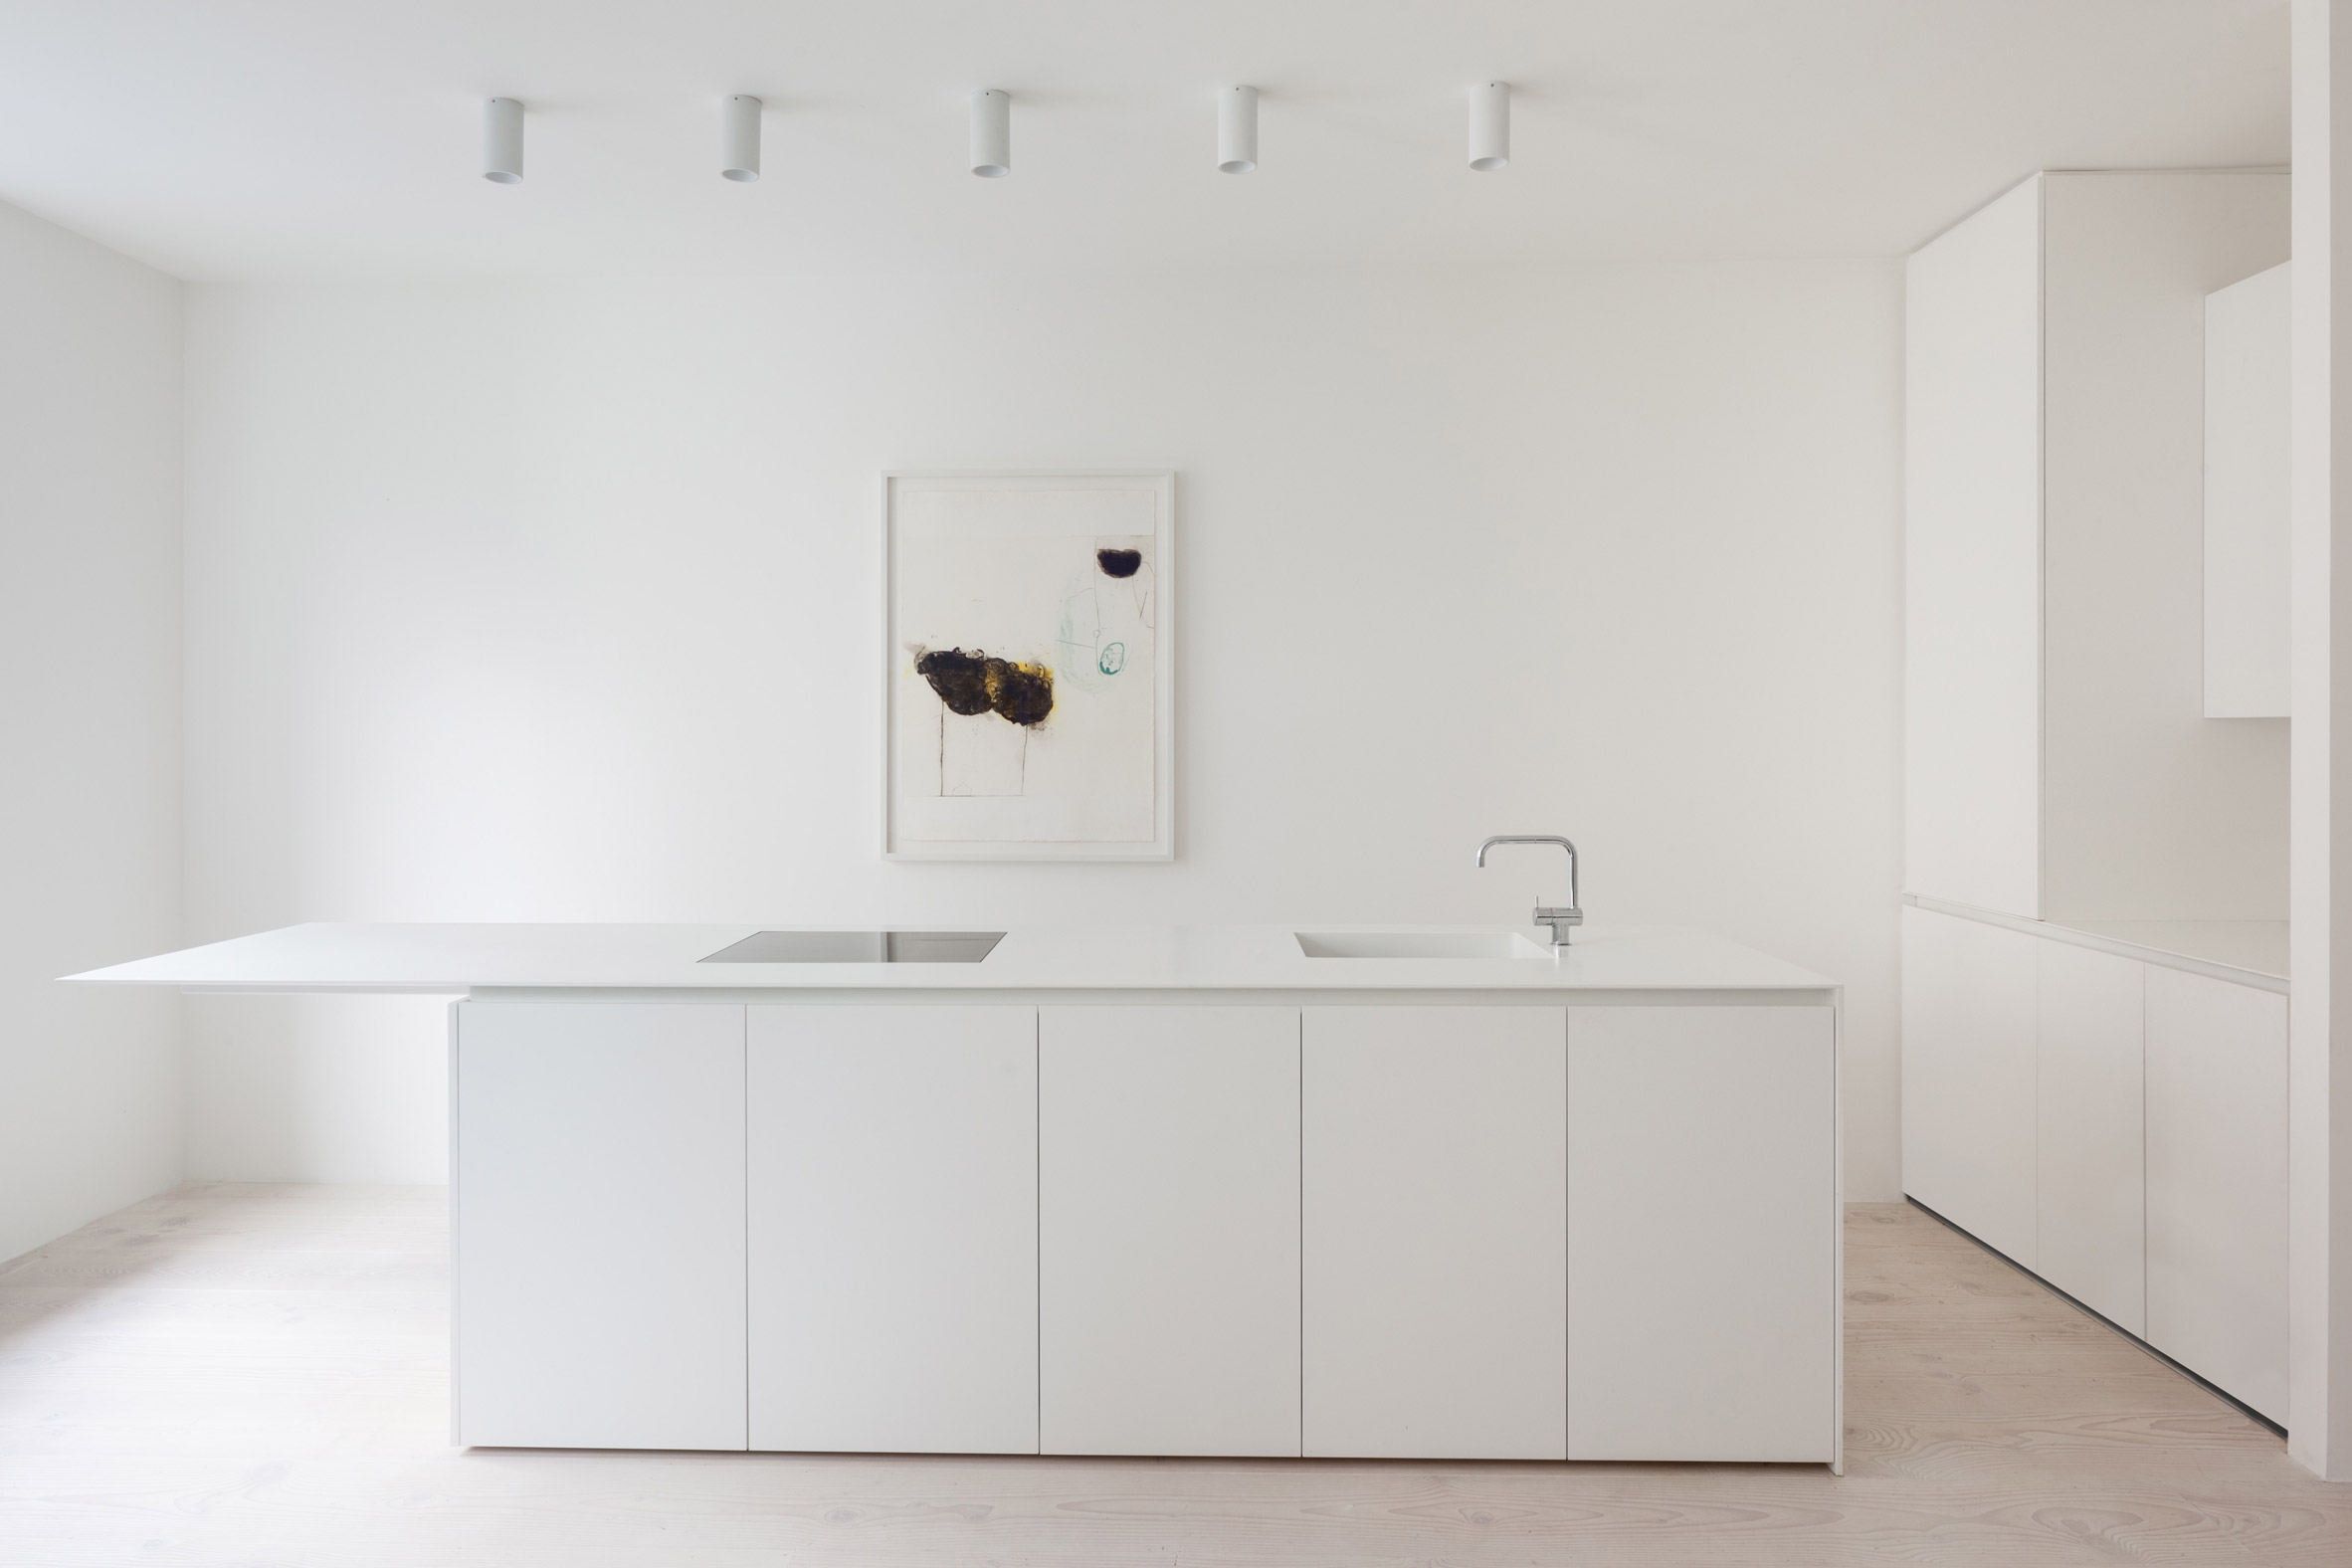 HASA Architects transforms London apartment into "seamless white box"